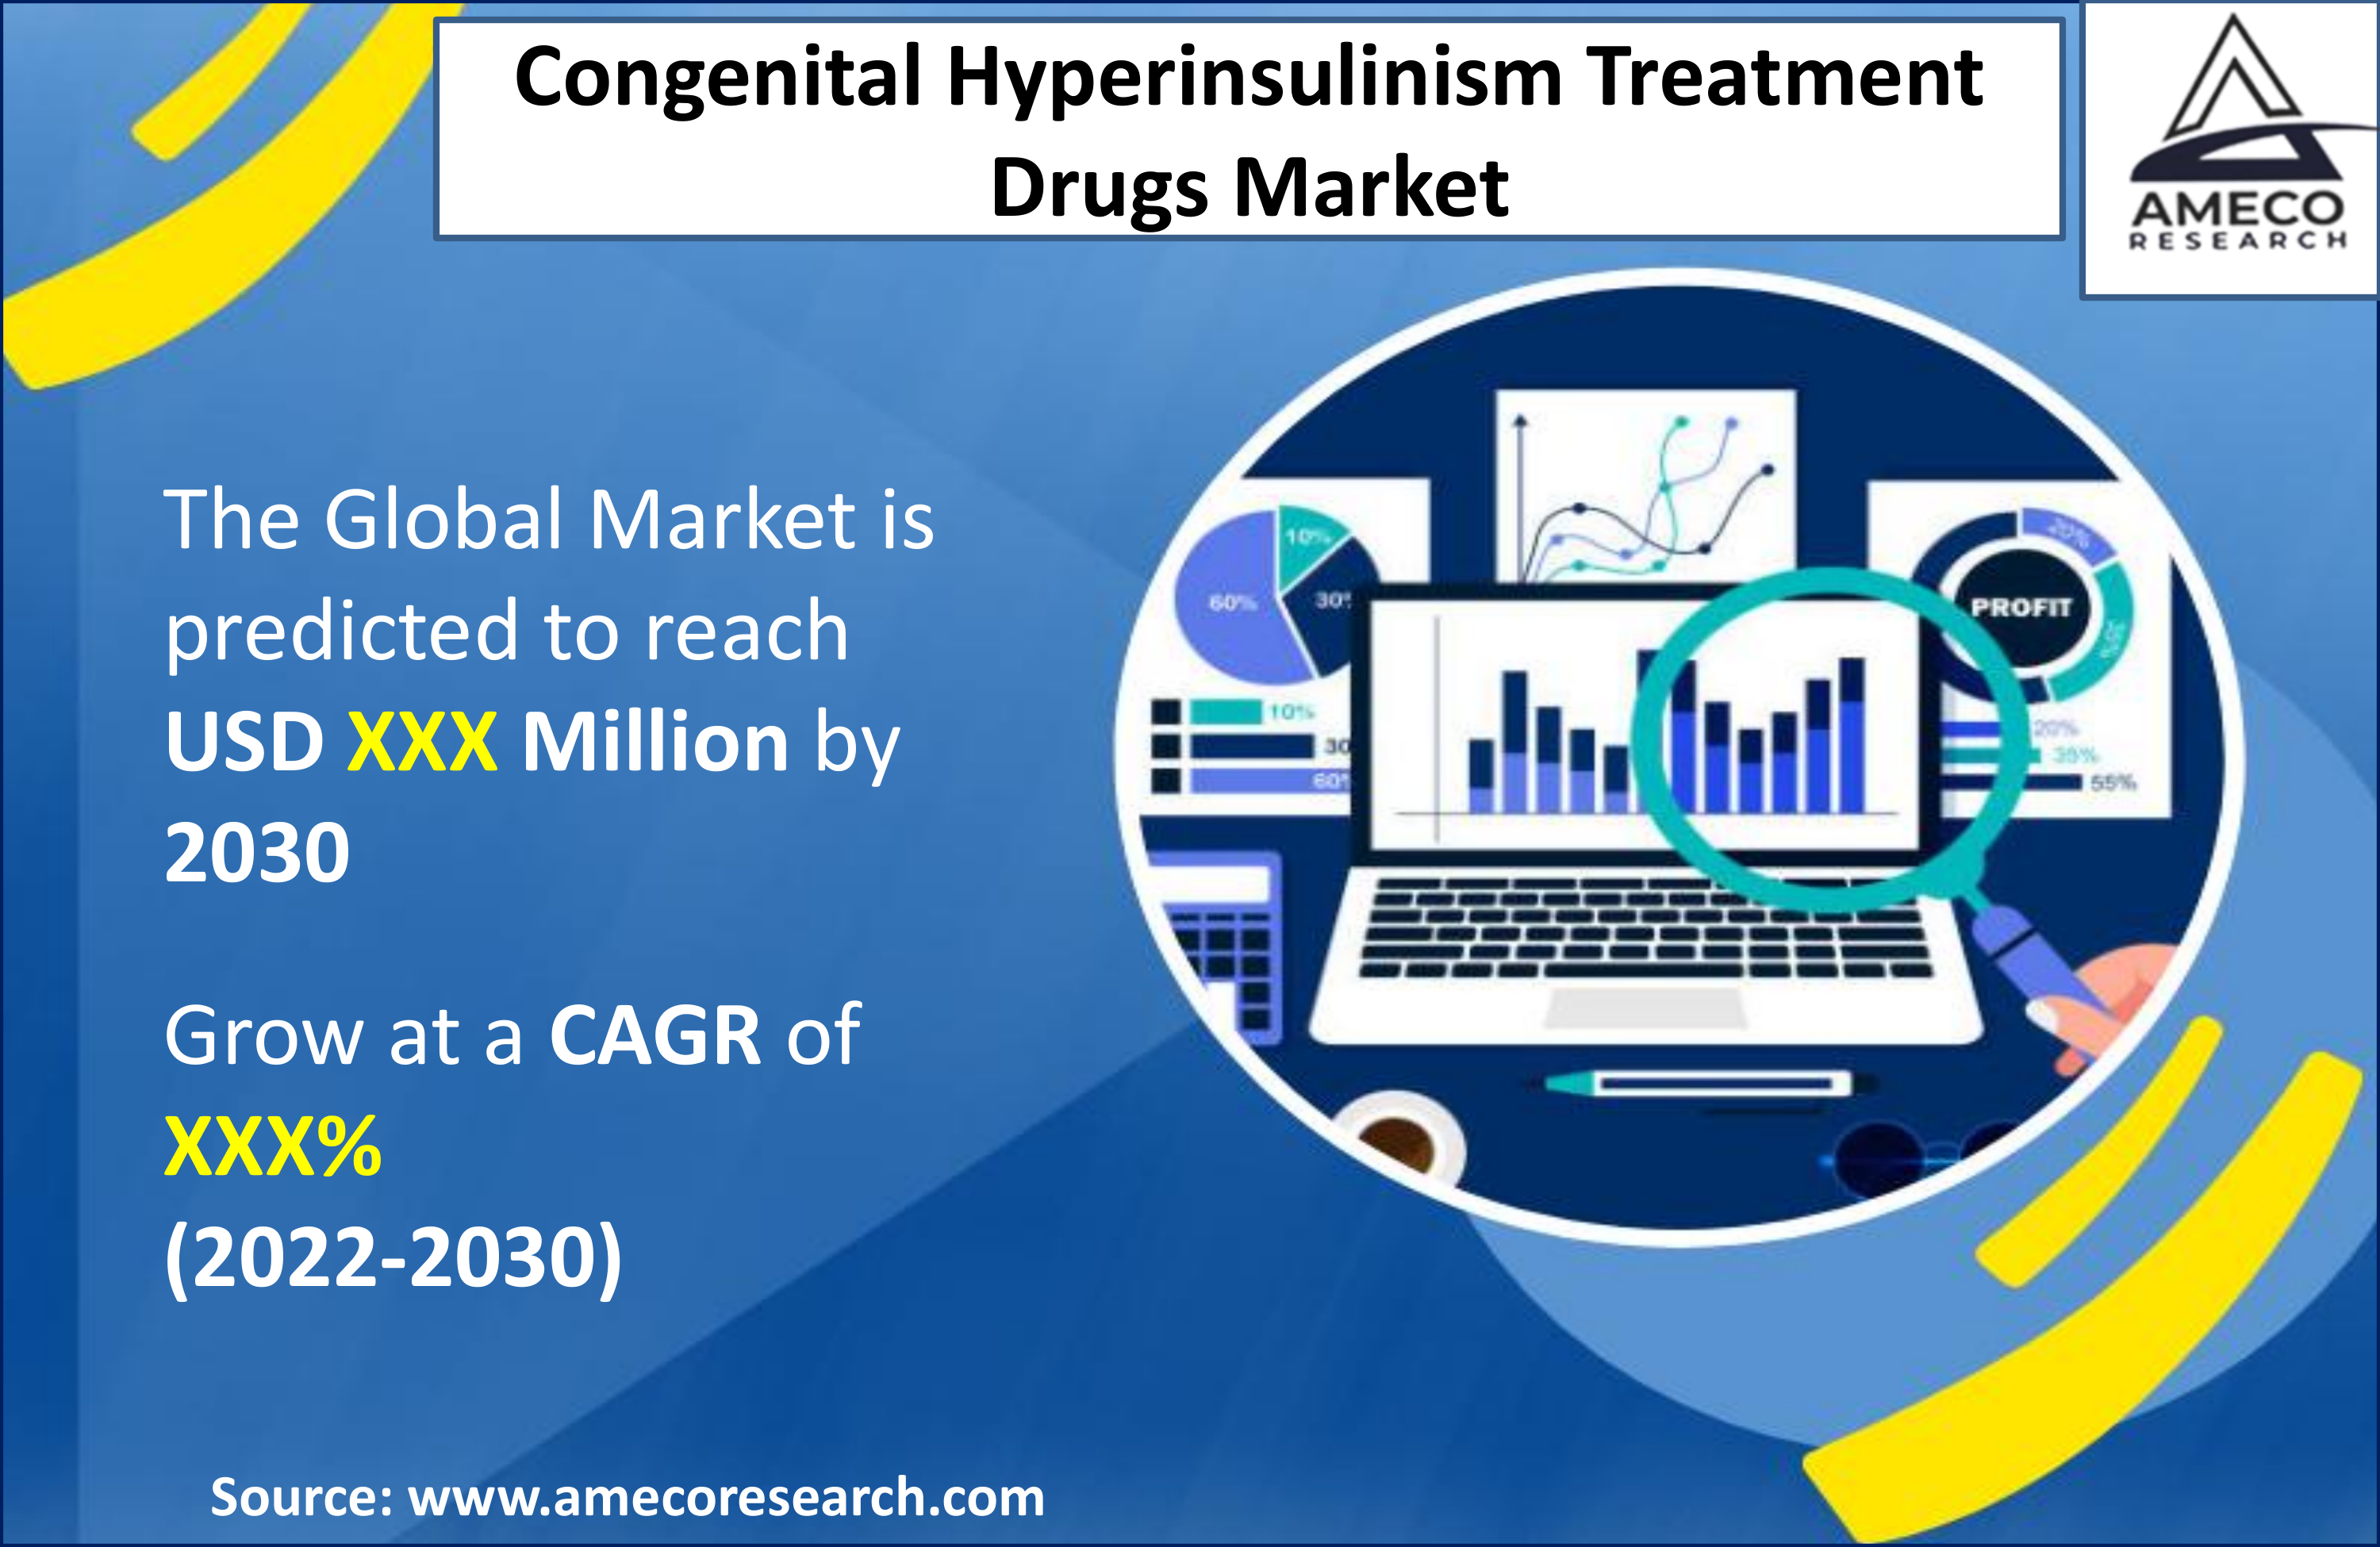 Congenital Hyperinsulinism Treatment Drugs Market